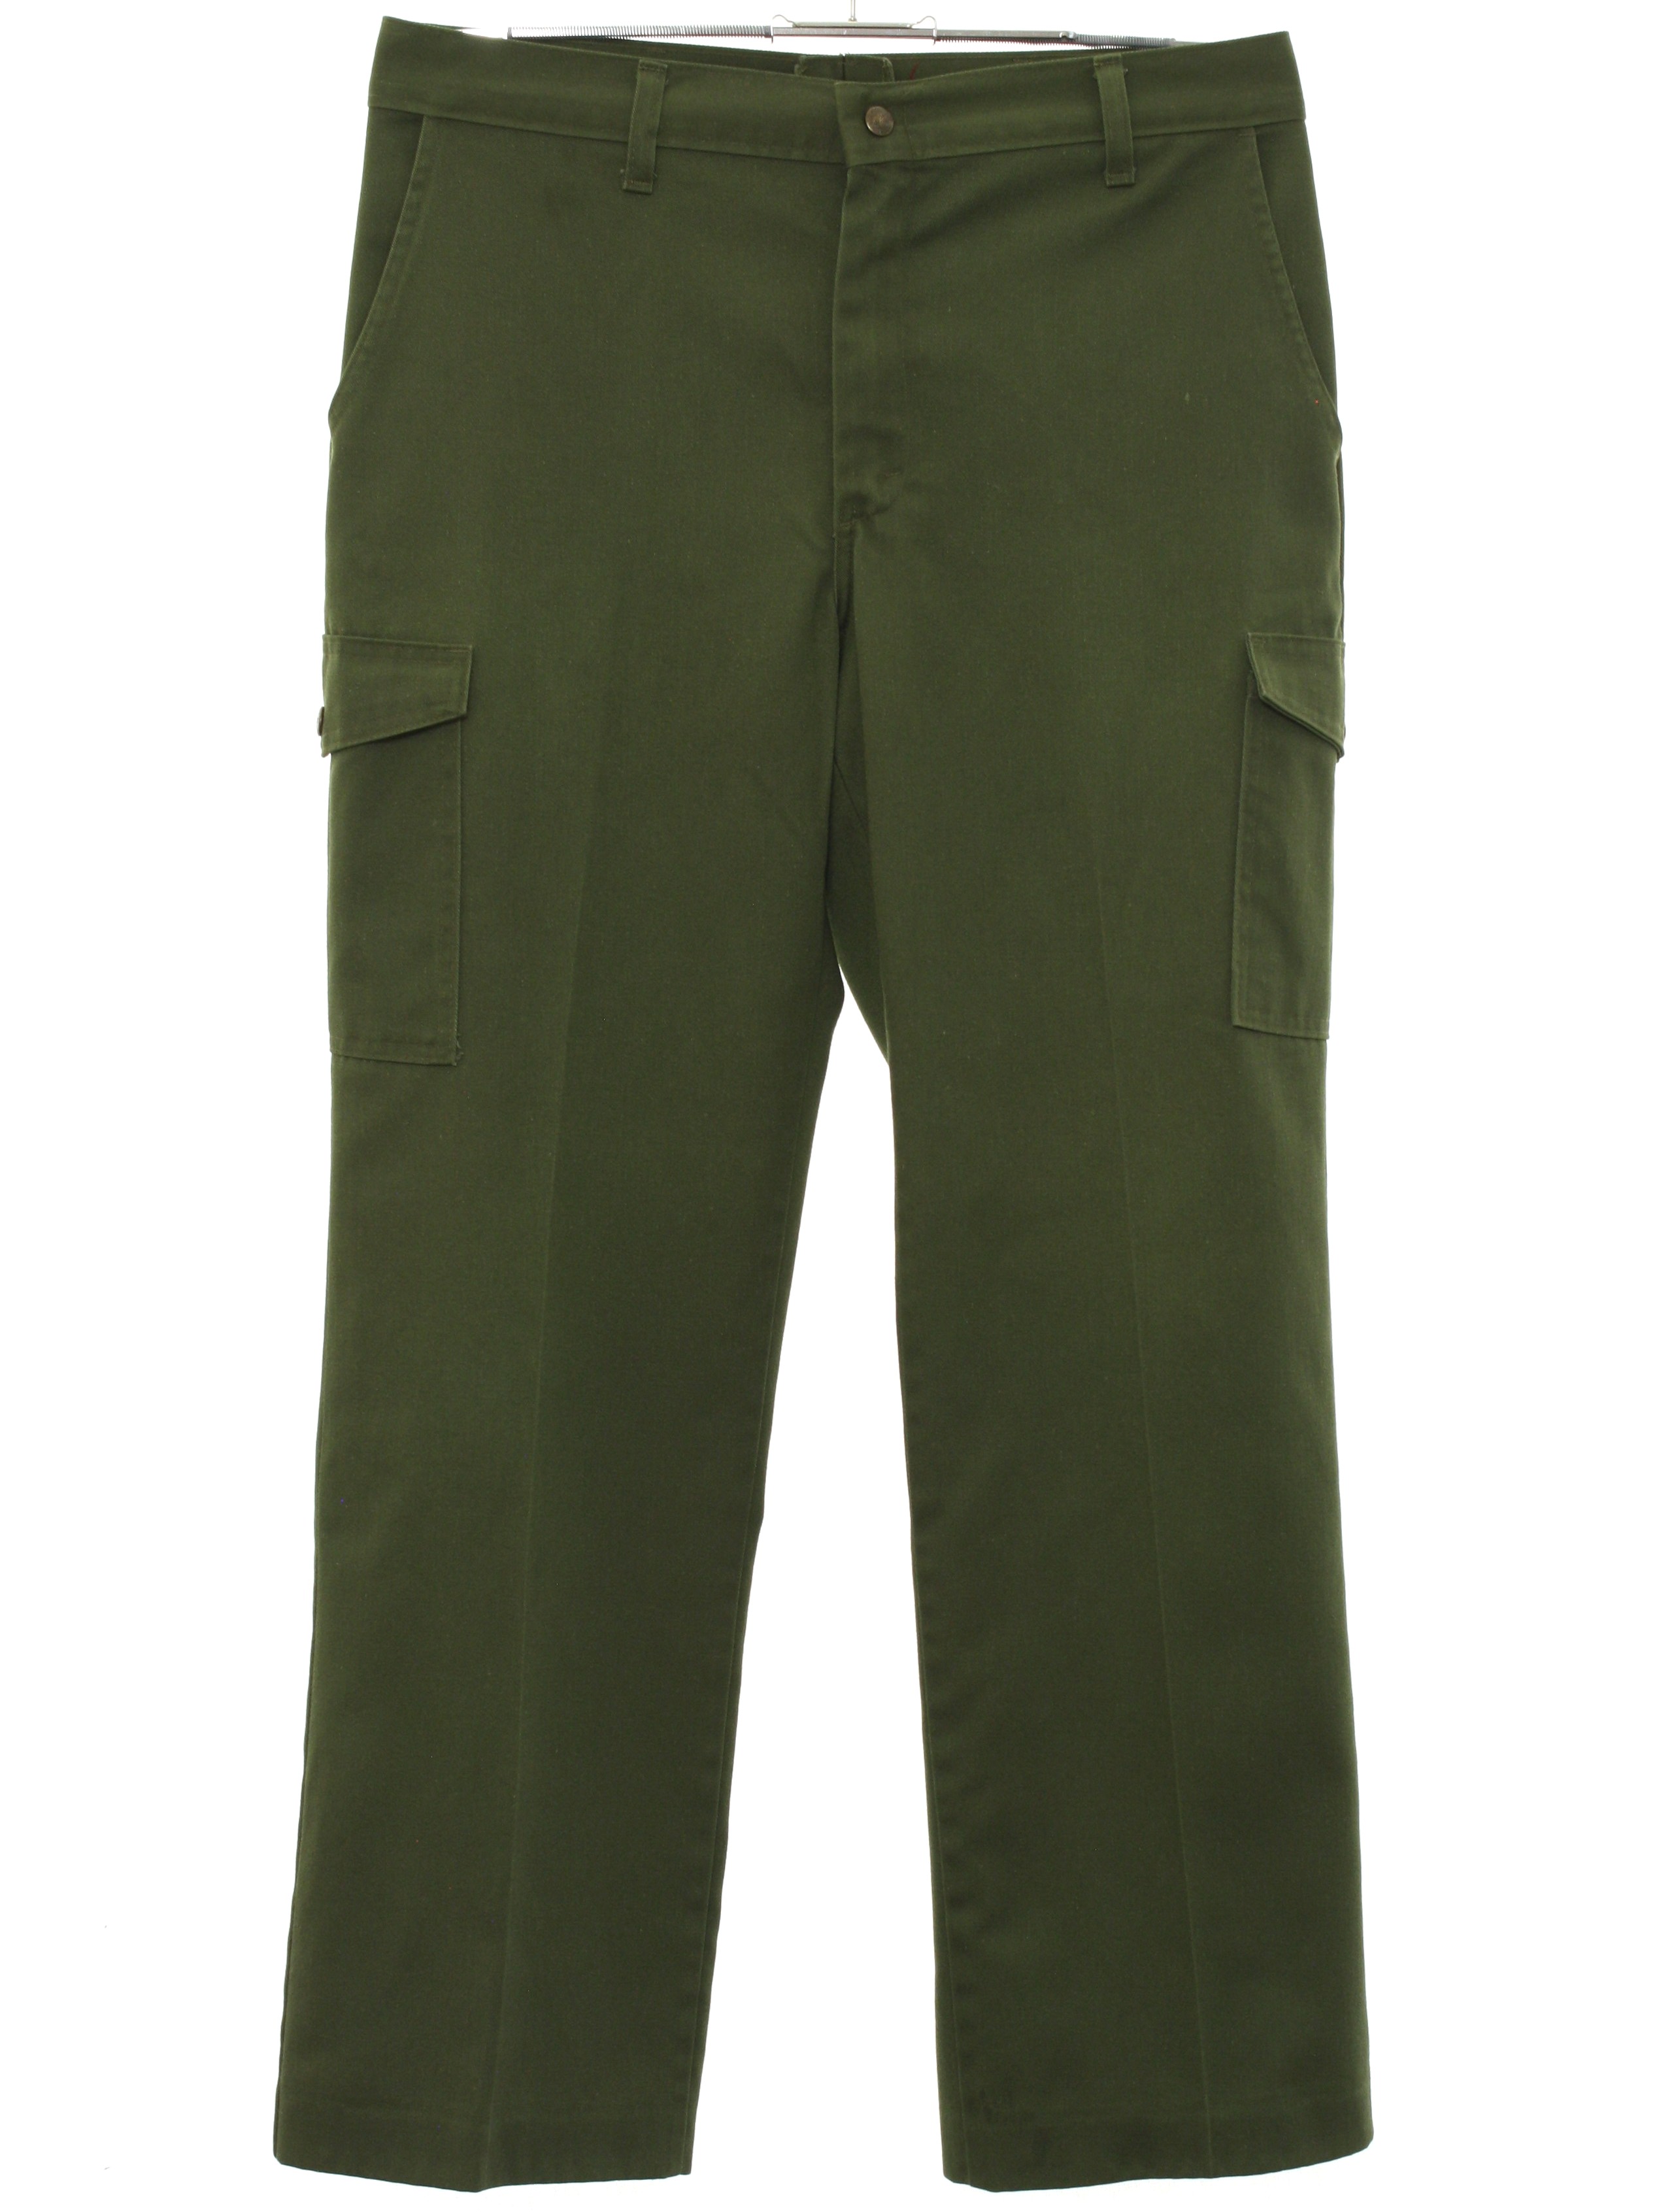 Retro Eighties Pants: 80s -Boy Scouts of America- Mens khaki green ...